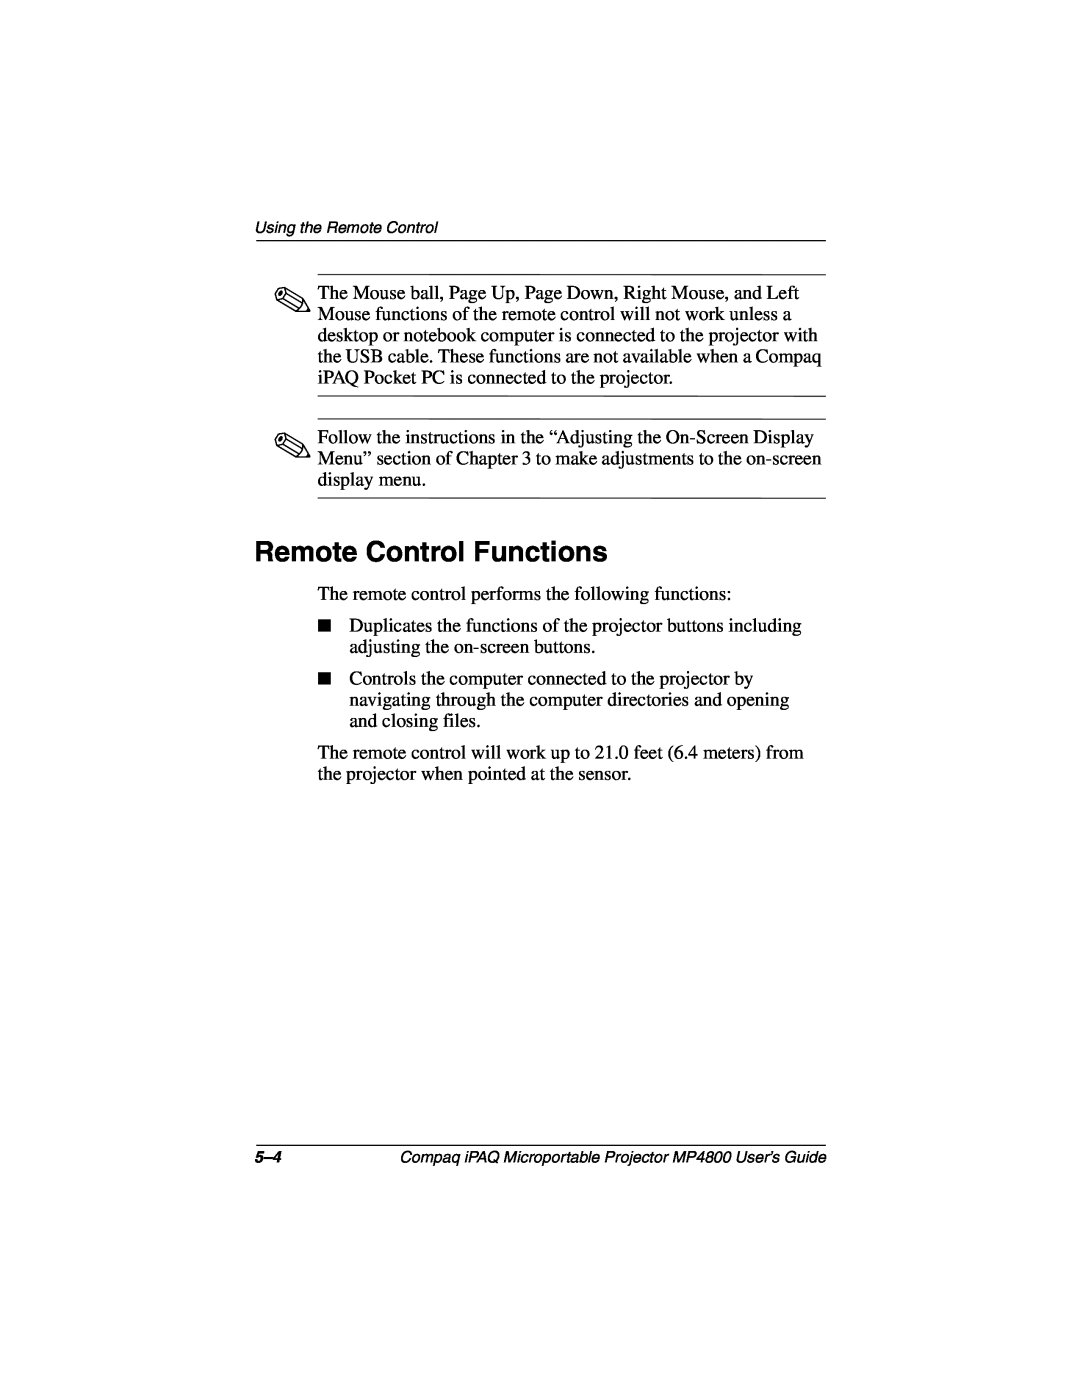 Compaq MP4800 manual Remote Control Functions 